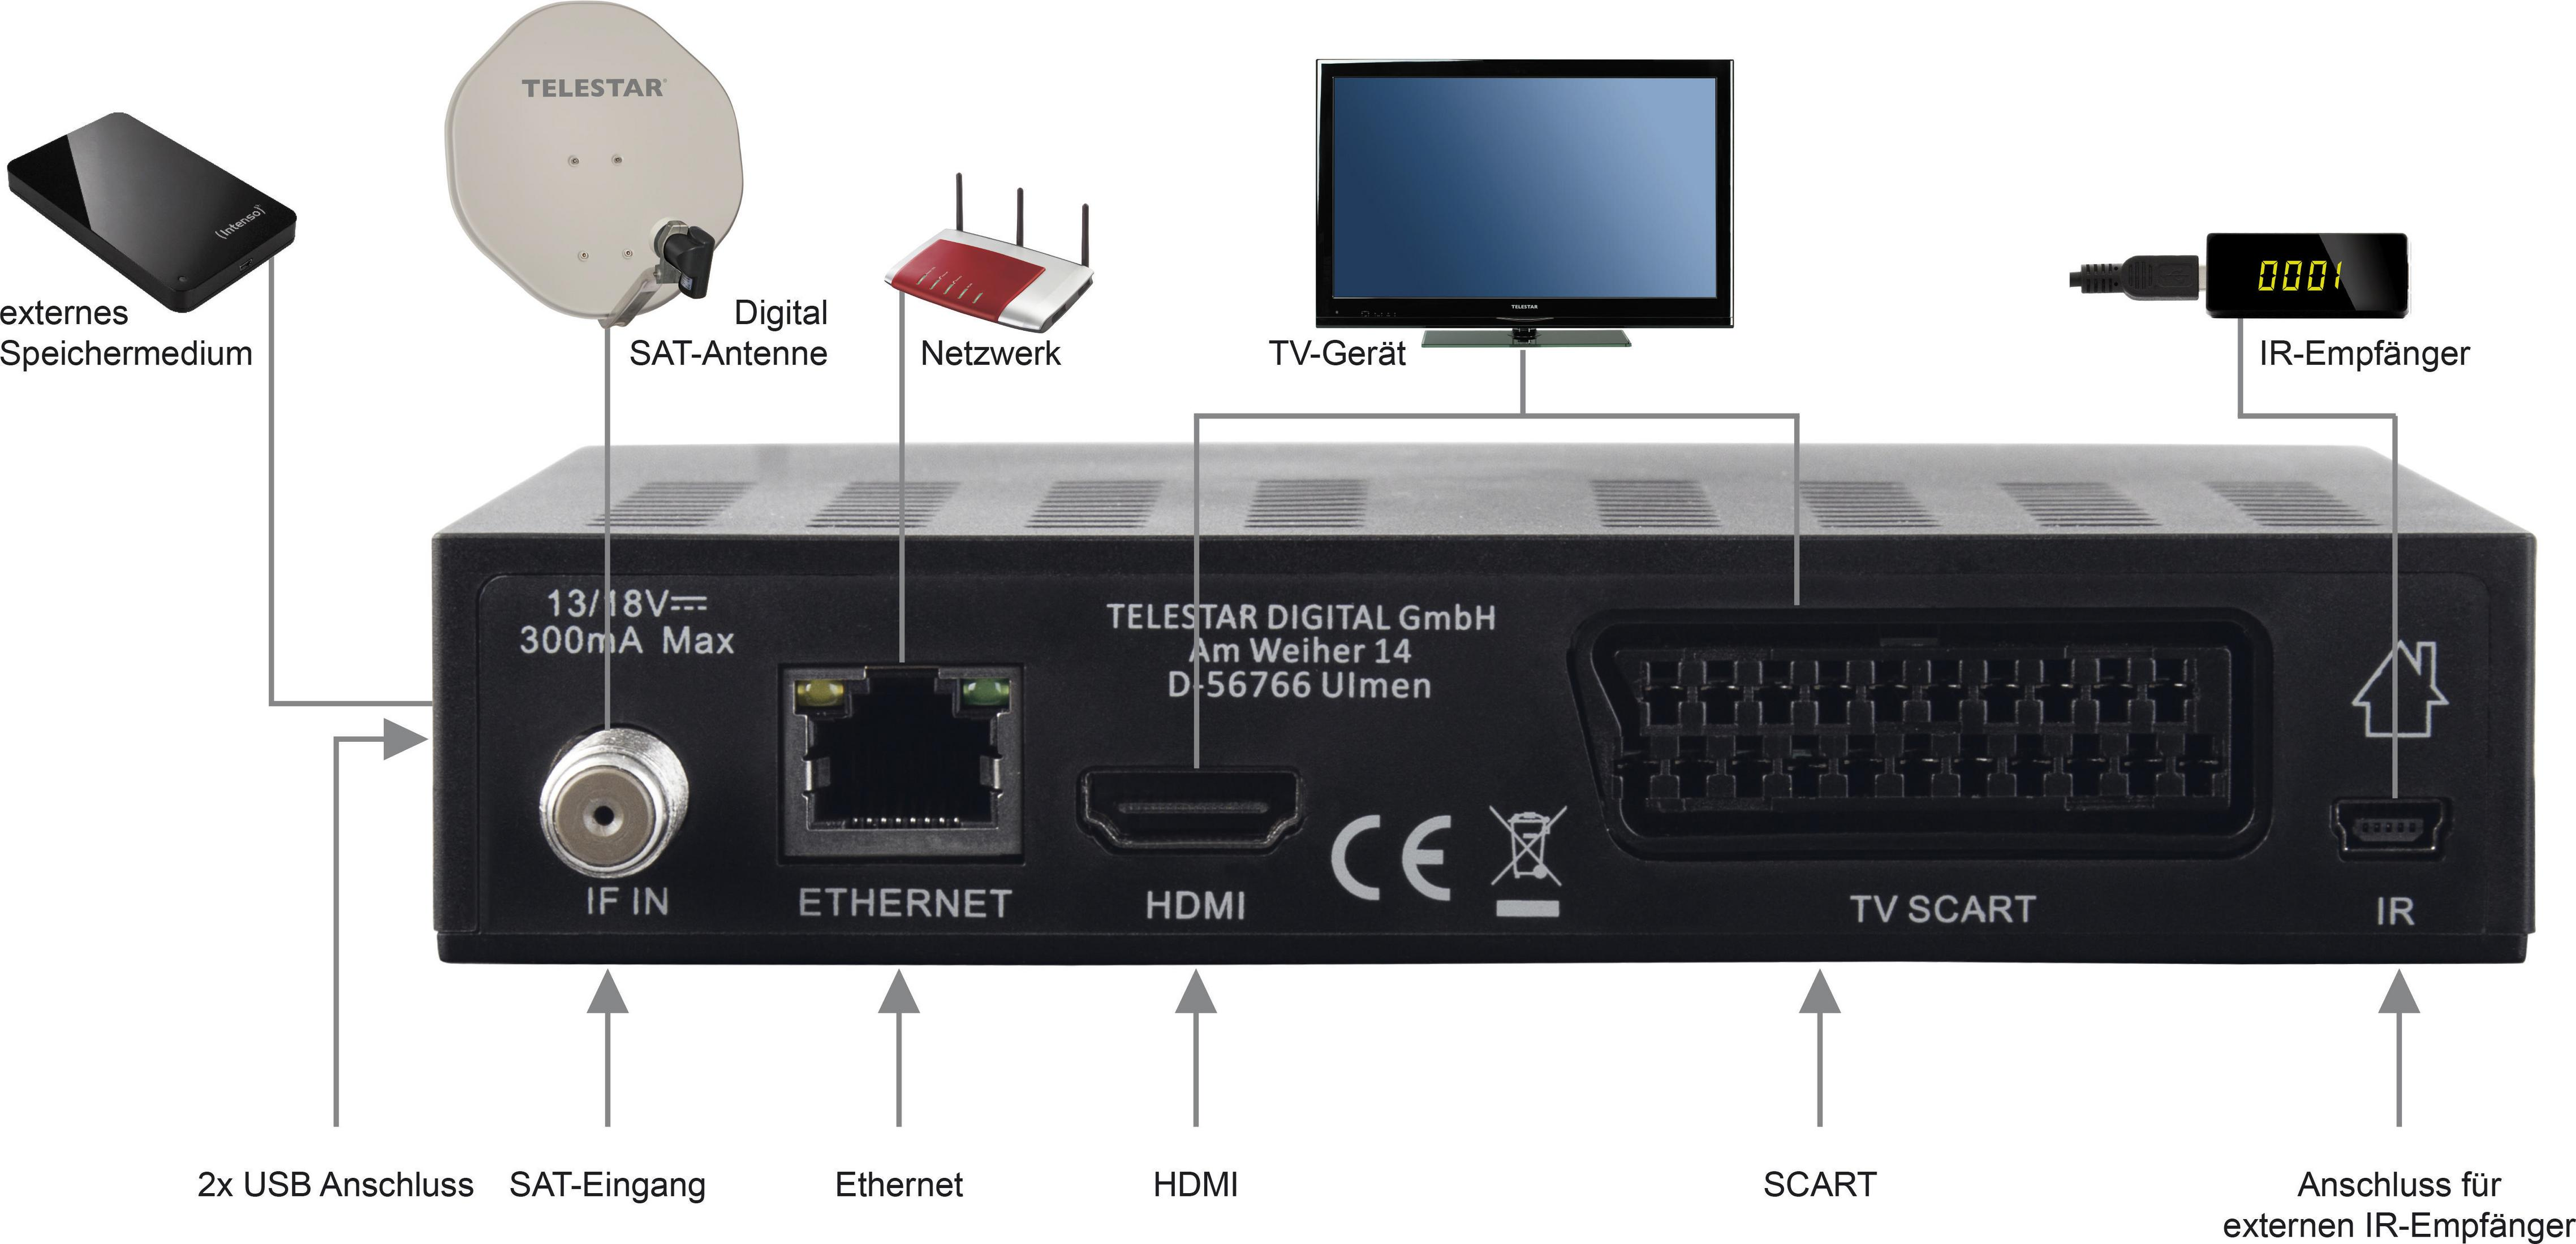 TELESTAR HD 6i kompakt SAT-Receiver (schwarz)